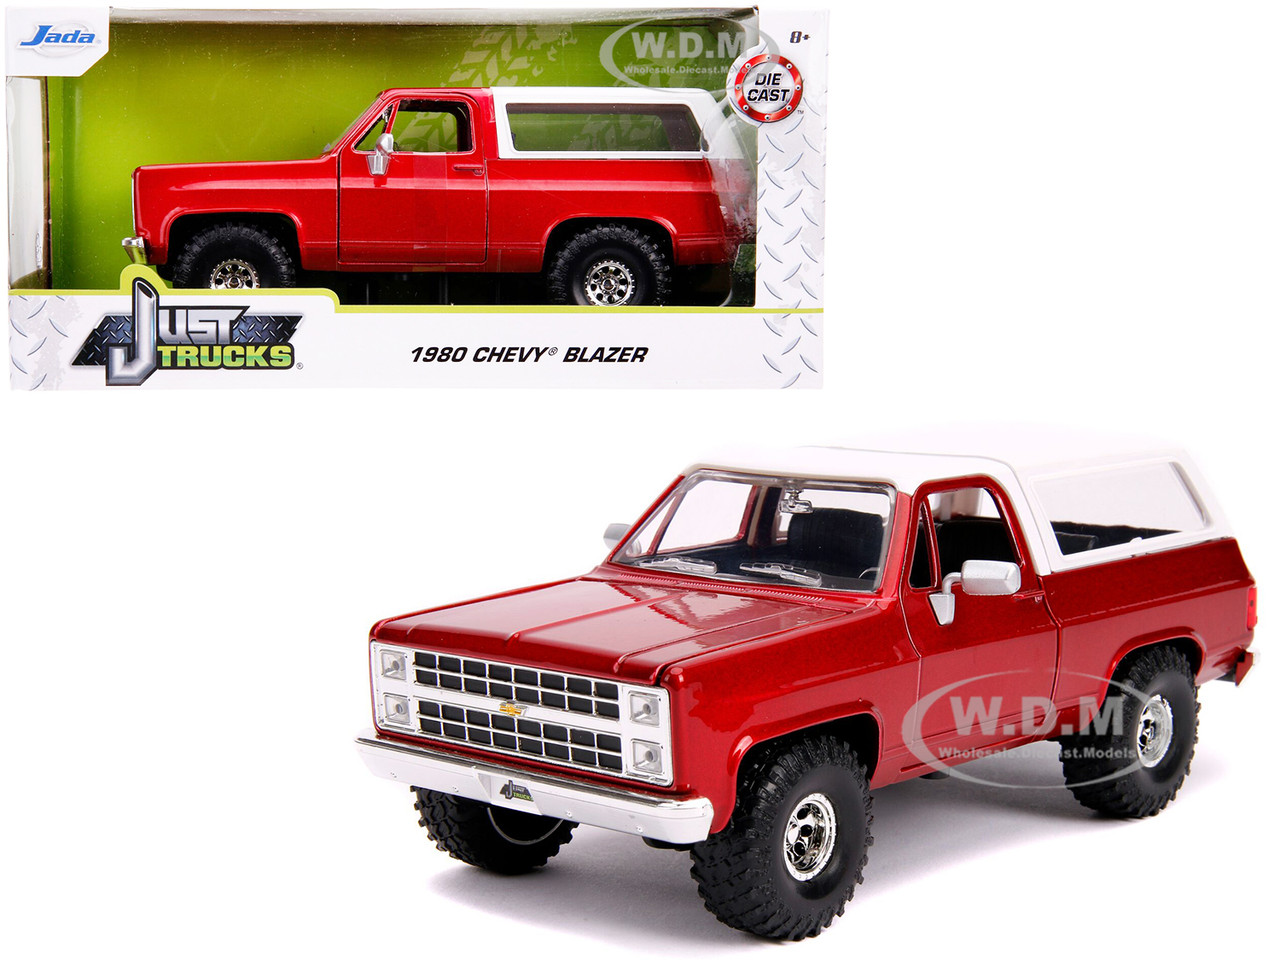 1980 Chevrolet Blazer K5 Off Road Metallic Red And White Just Trucks 1 24 Diecast Model Car By Jada